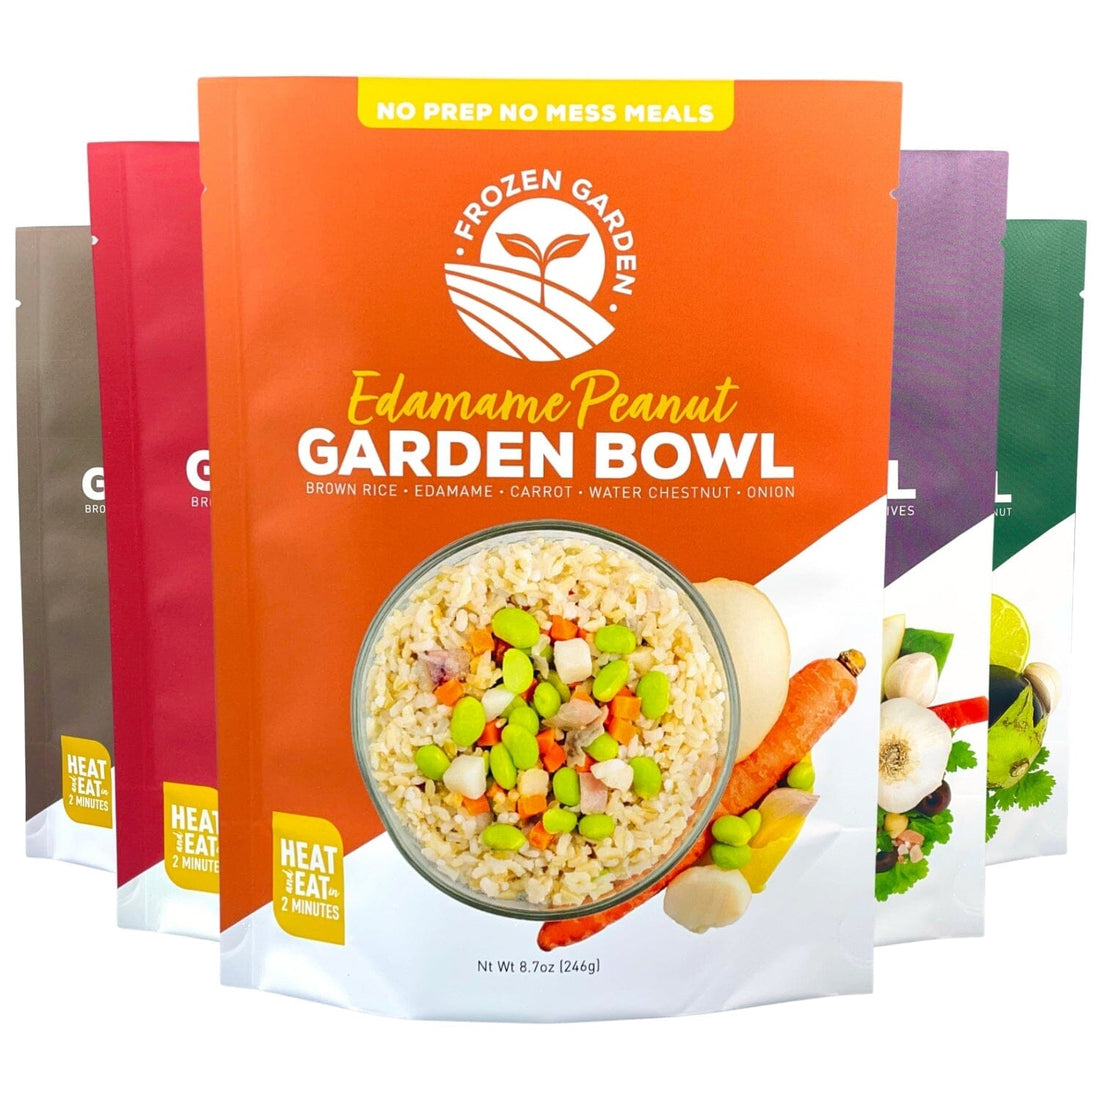 Garden Bowl Variety Pack (7 Pack) SoHookd Frozen Garden